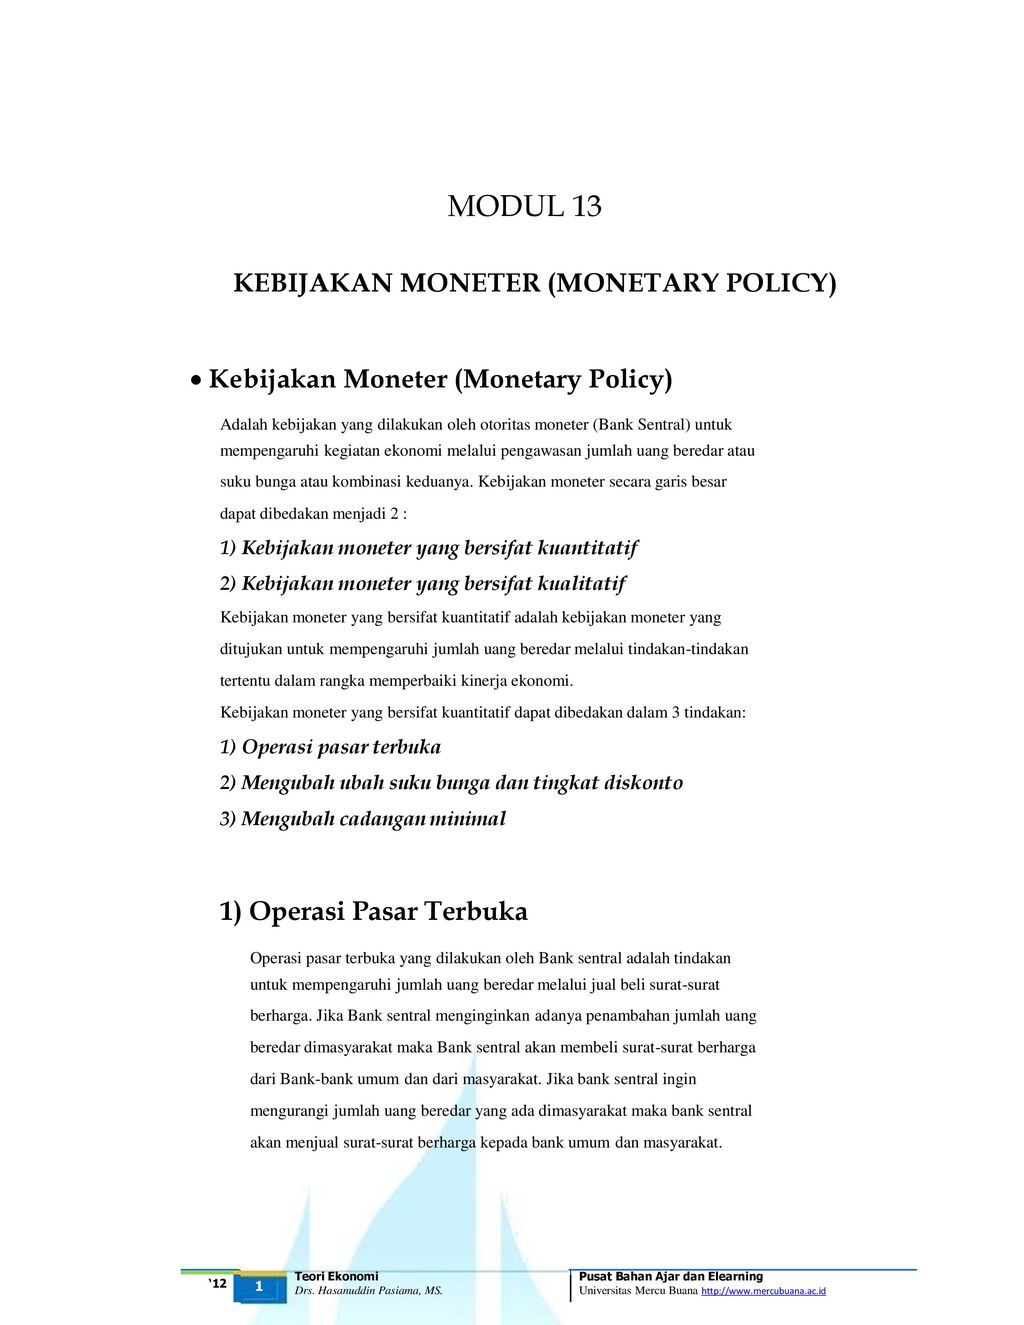 KEBIJAKAN MONETER (MONETARY POLICY)